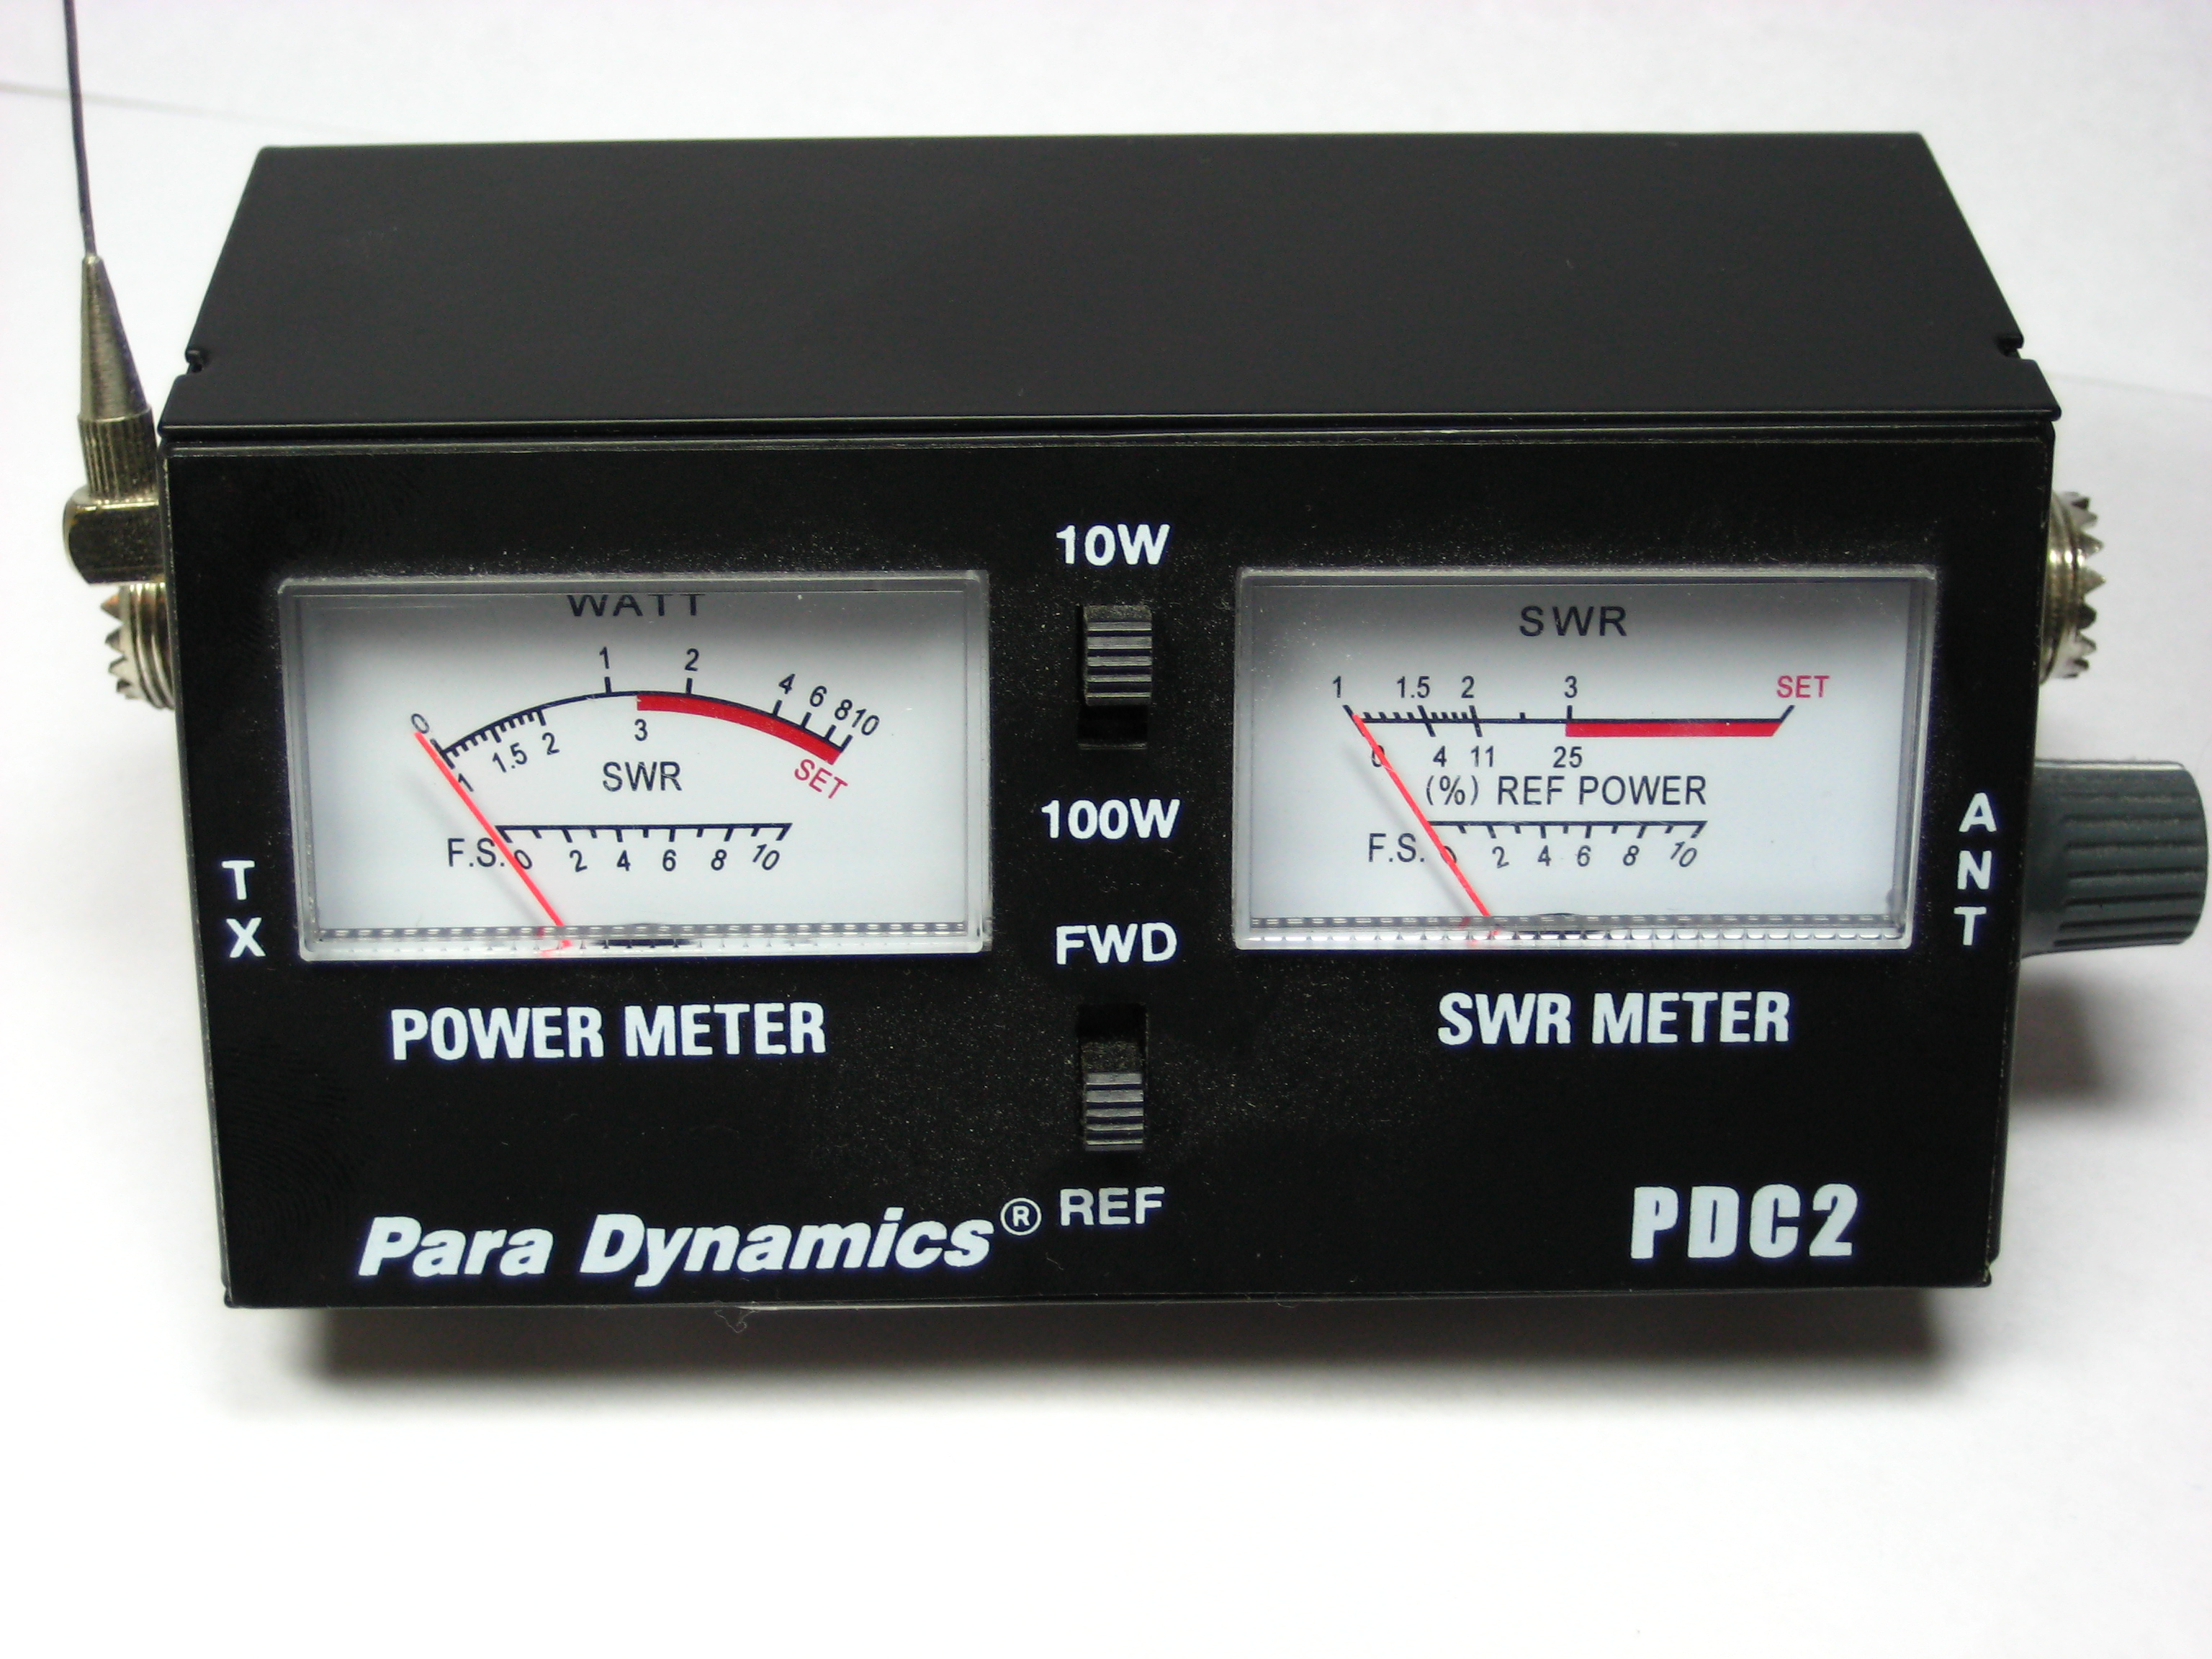 Signstek Professional UV Dual Band Standing-Wave Meter Power Meter SWR/Power Meter for Testing SWR Power